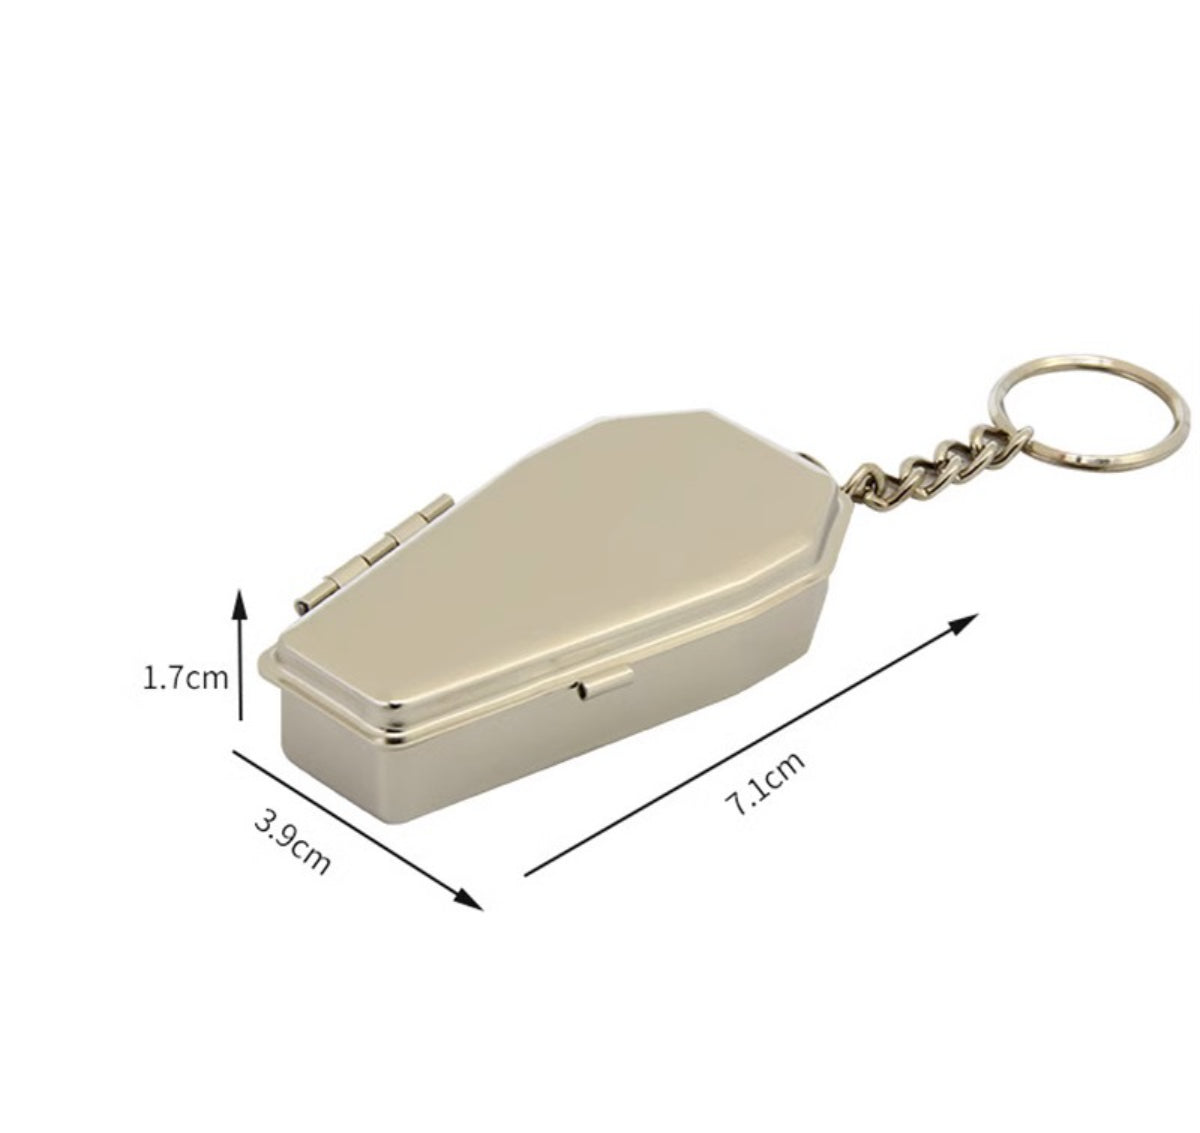 Ro Rox Mini Coffin Ashtray Metal Portable Gothic Keychain